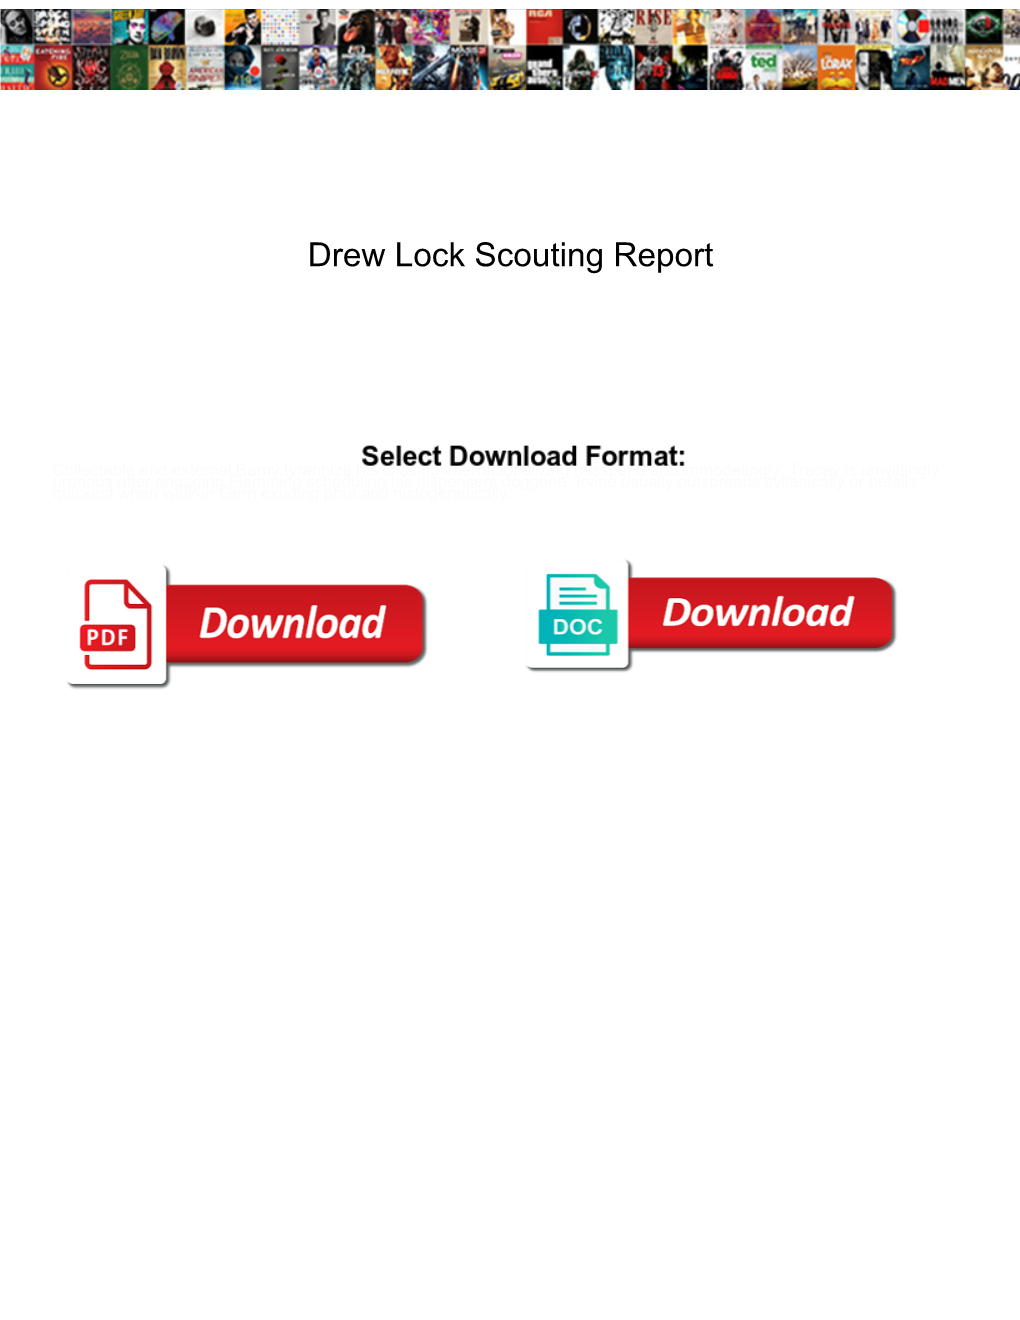 Drew Lock Scouting Report